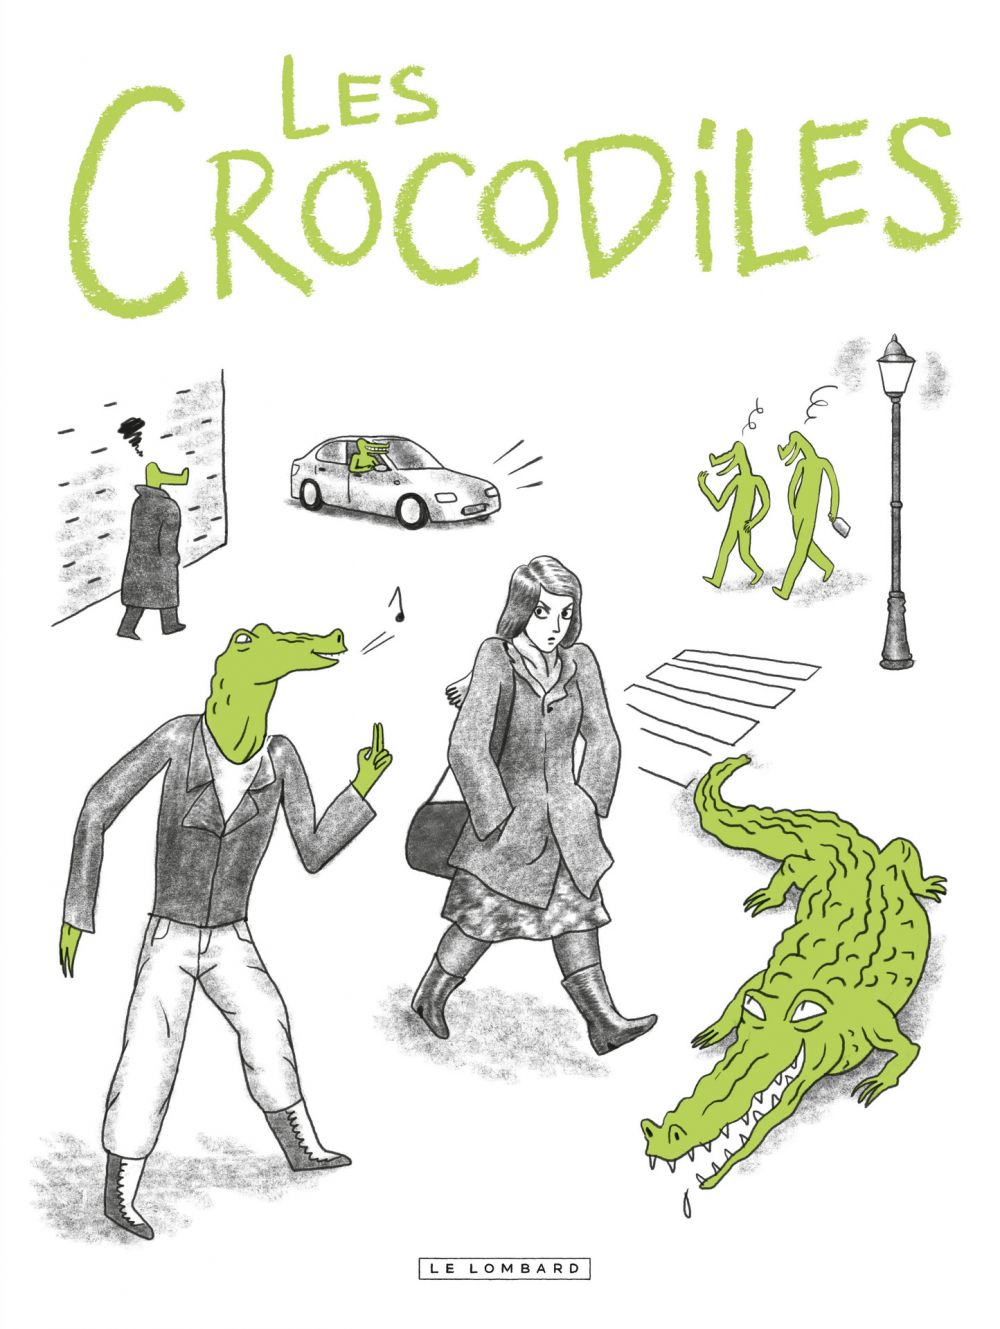 Les Crocodiles